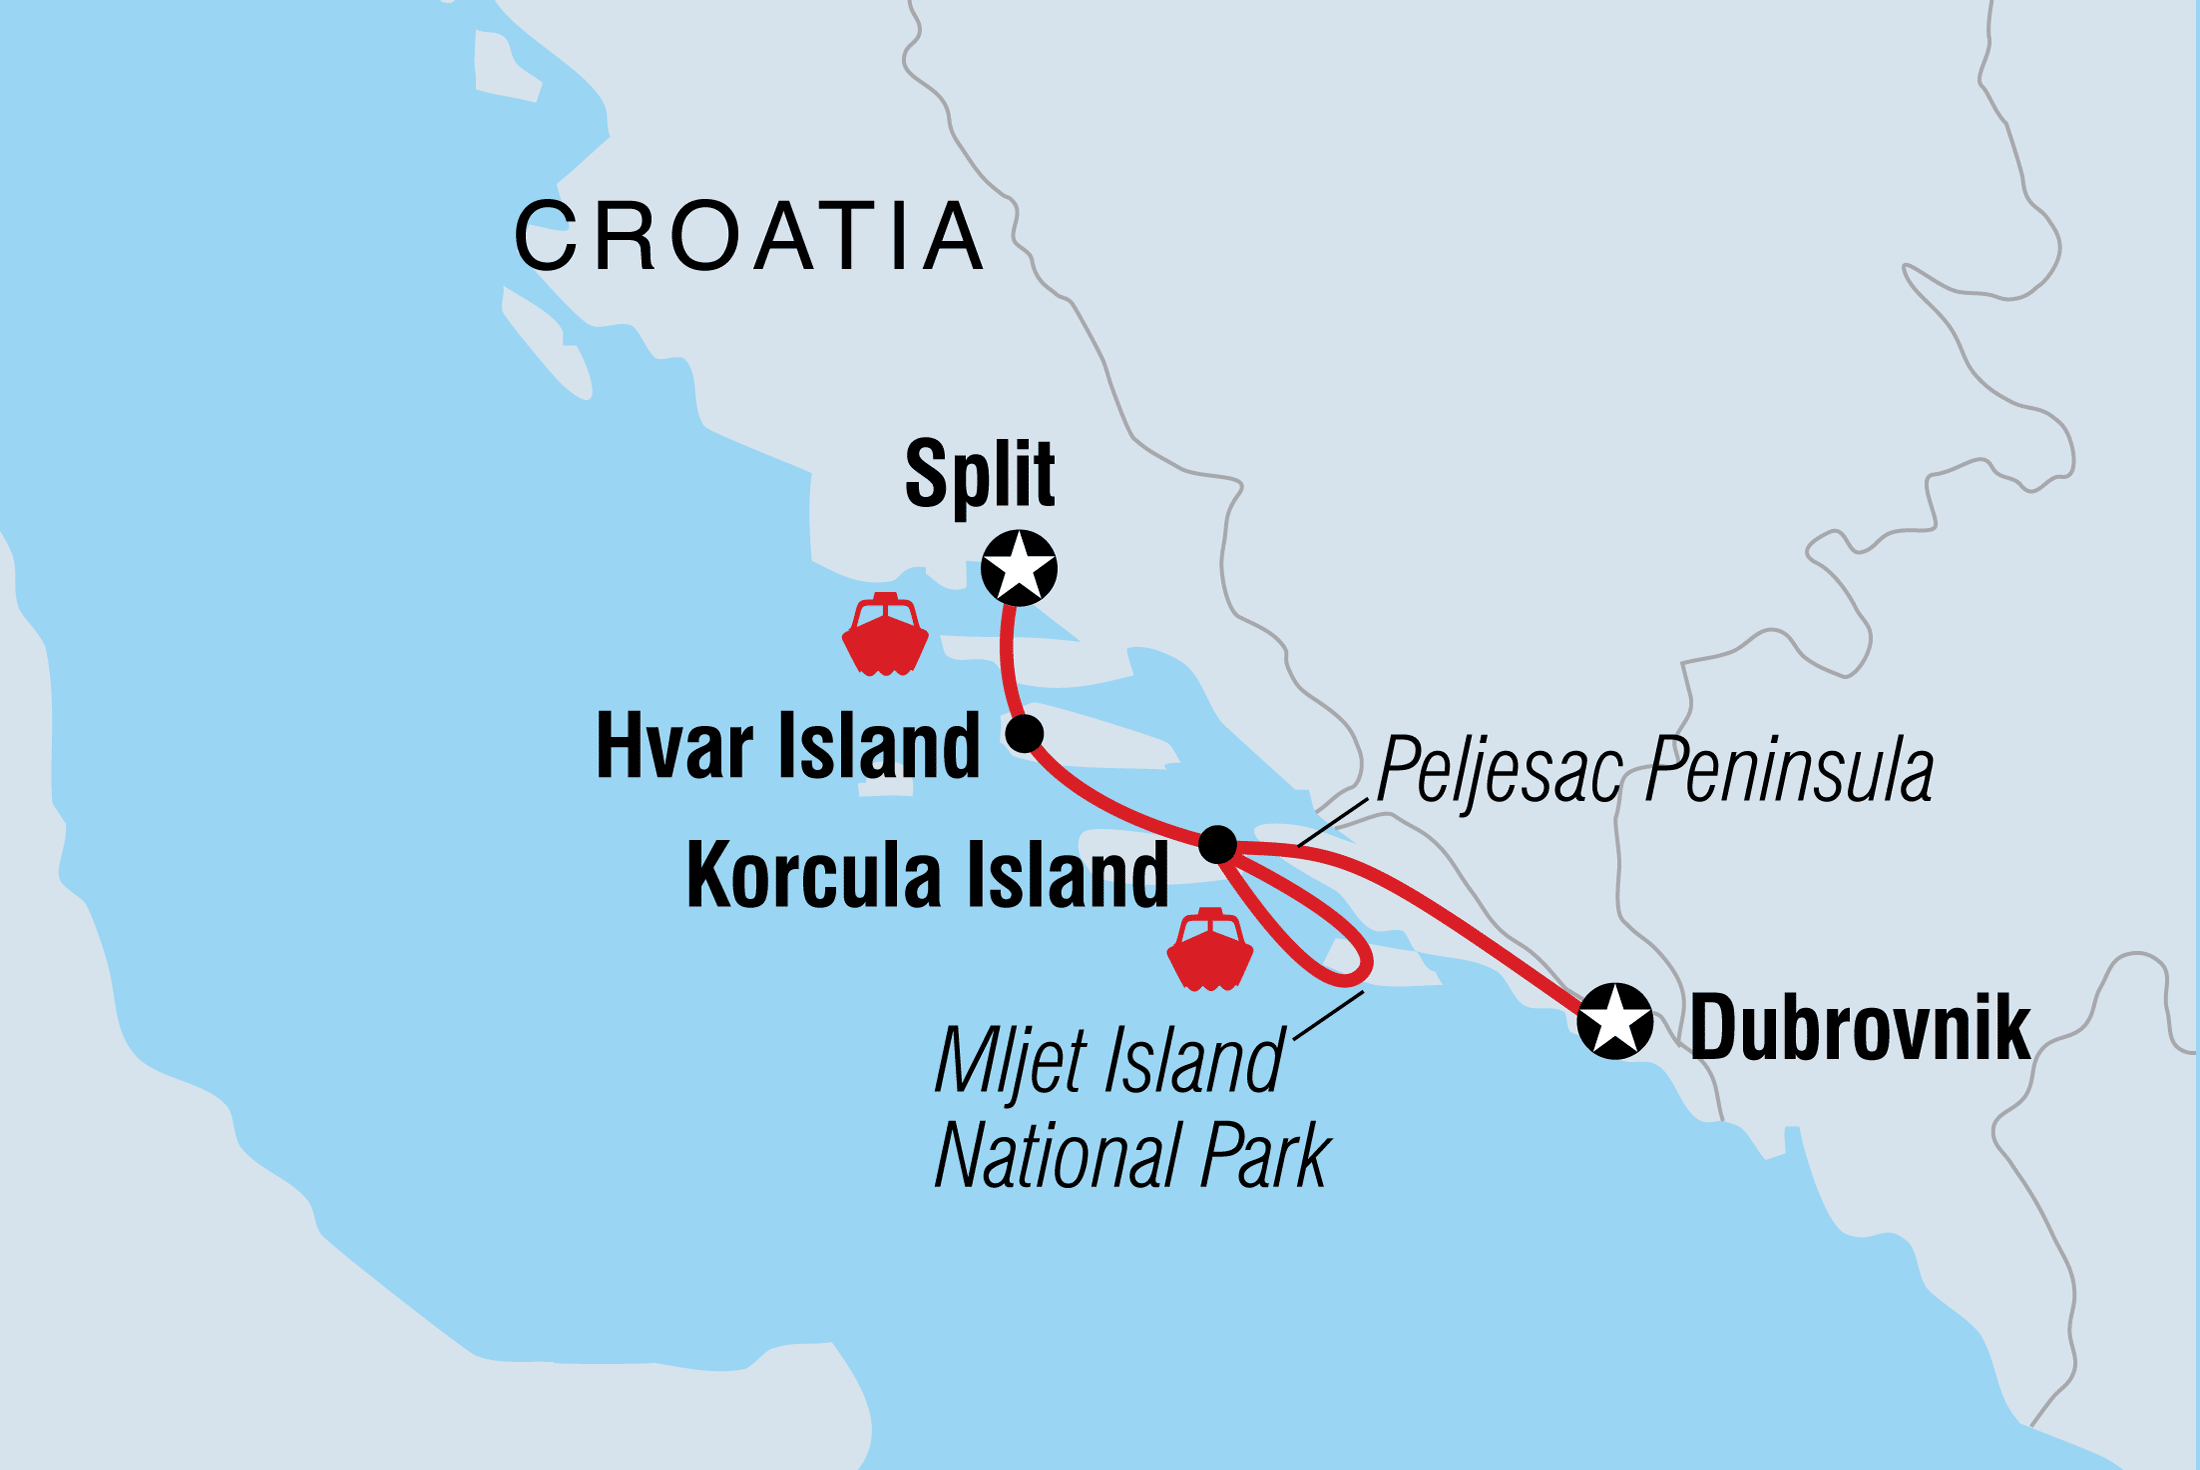 Map of Explore Croatia including Croatia